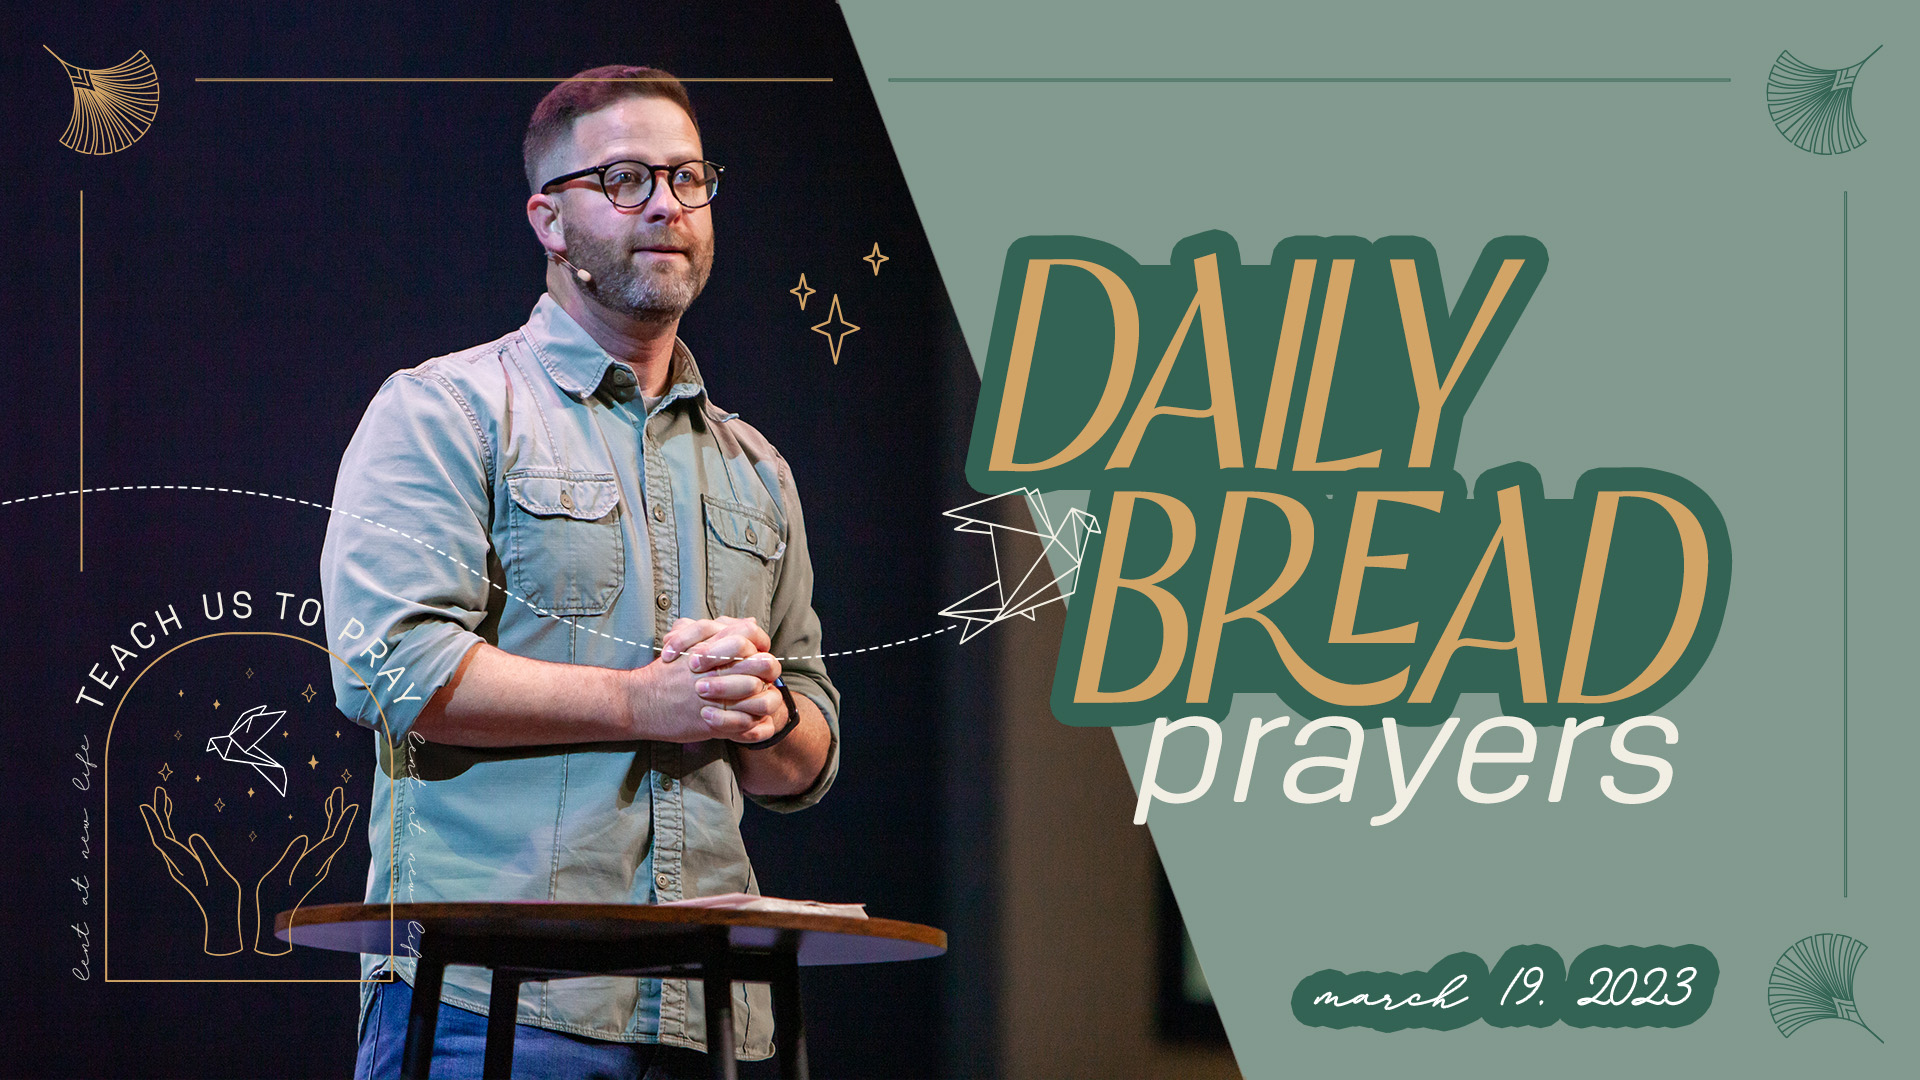 Daily Bread Prayers Image